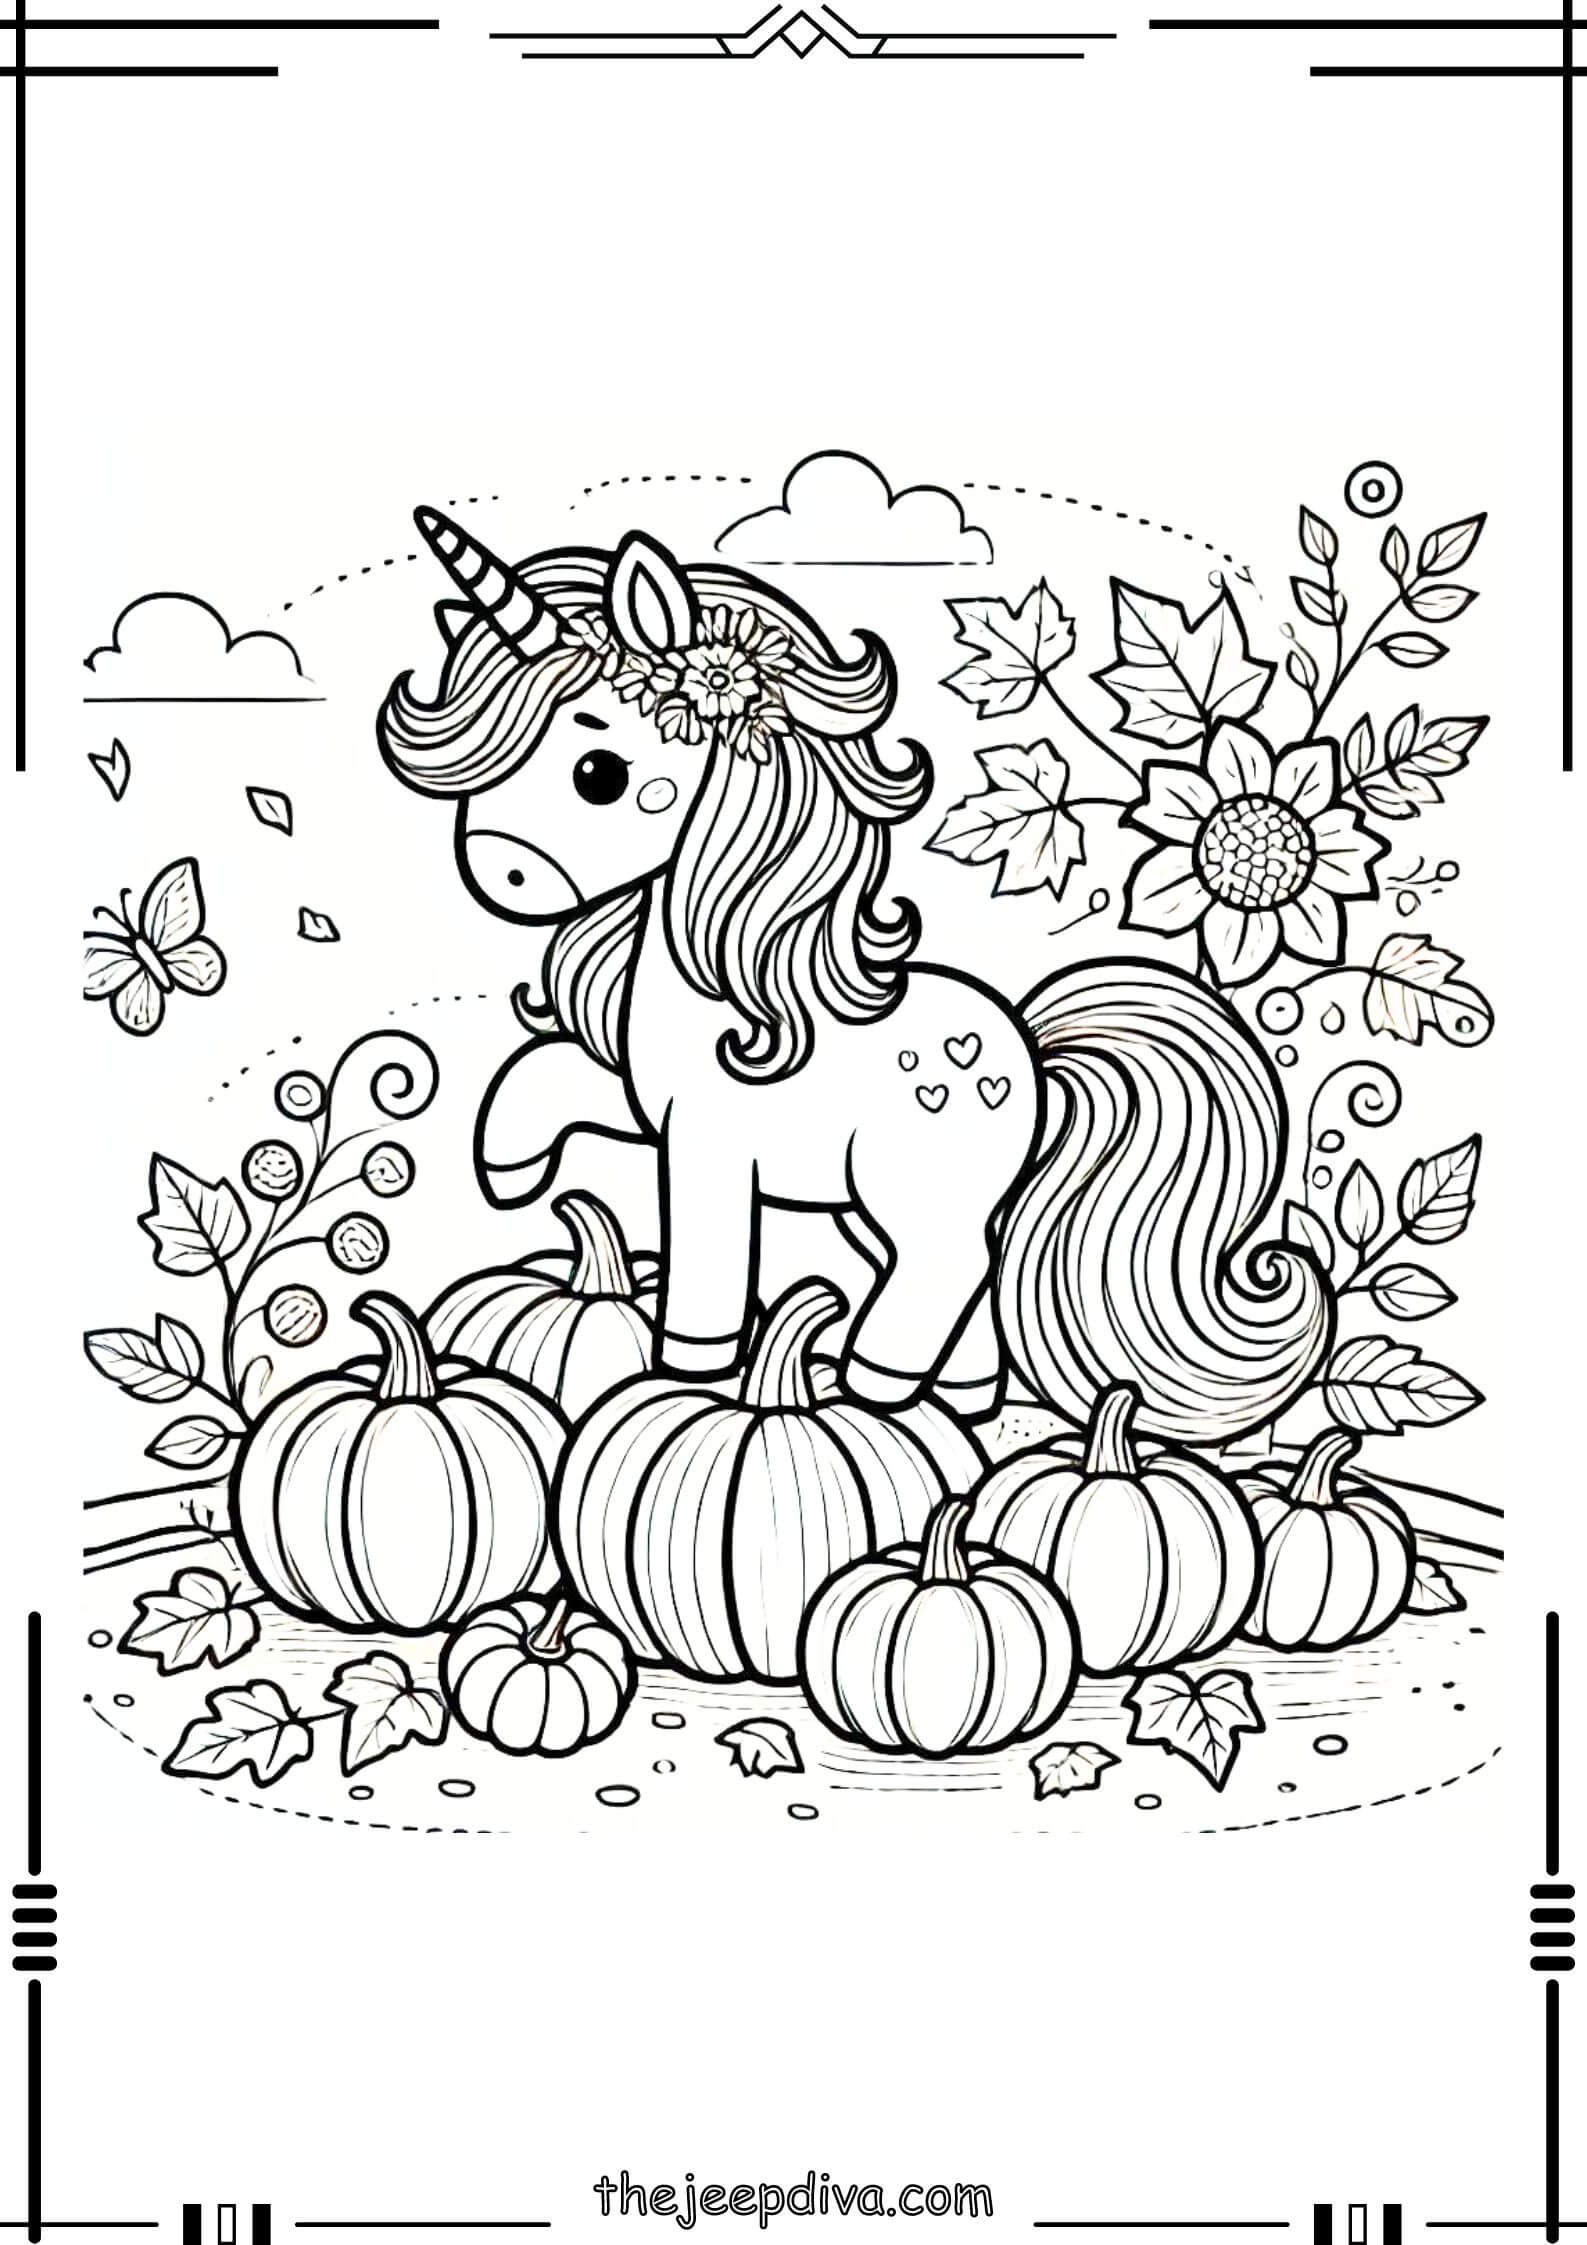 unicorn-coloring-page-hard-4